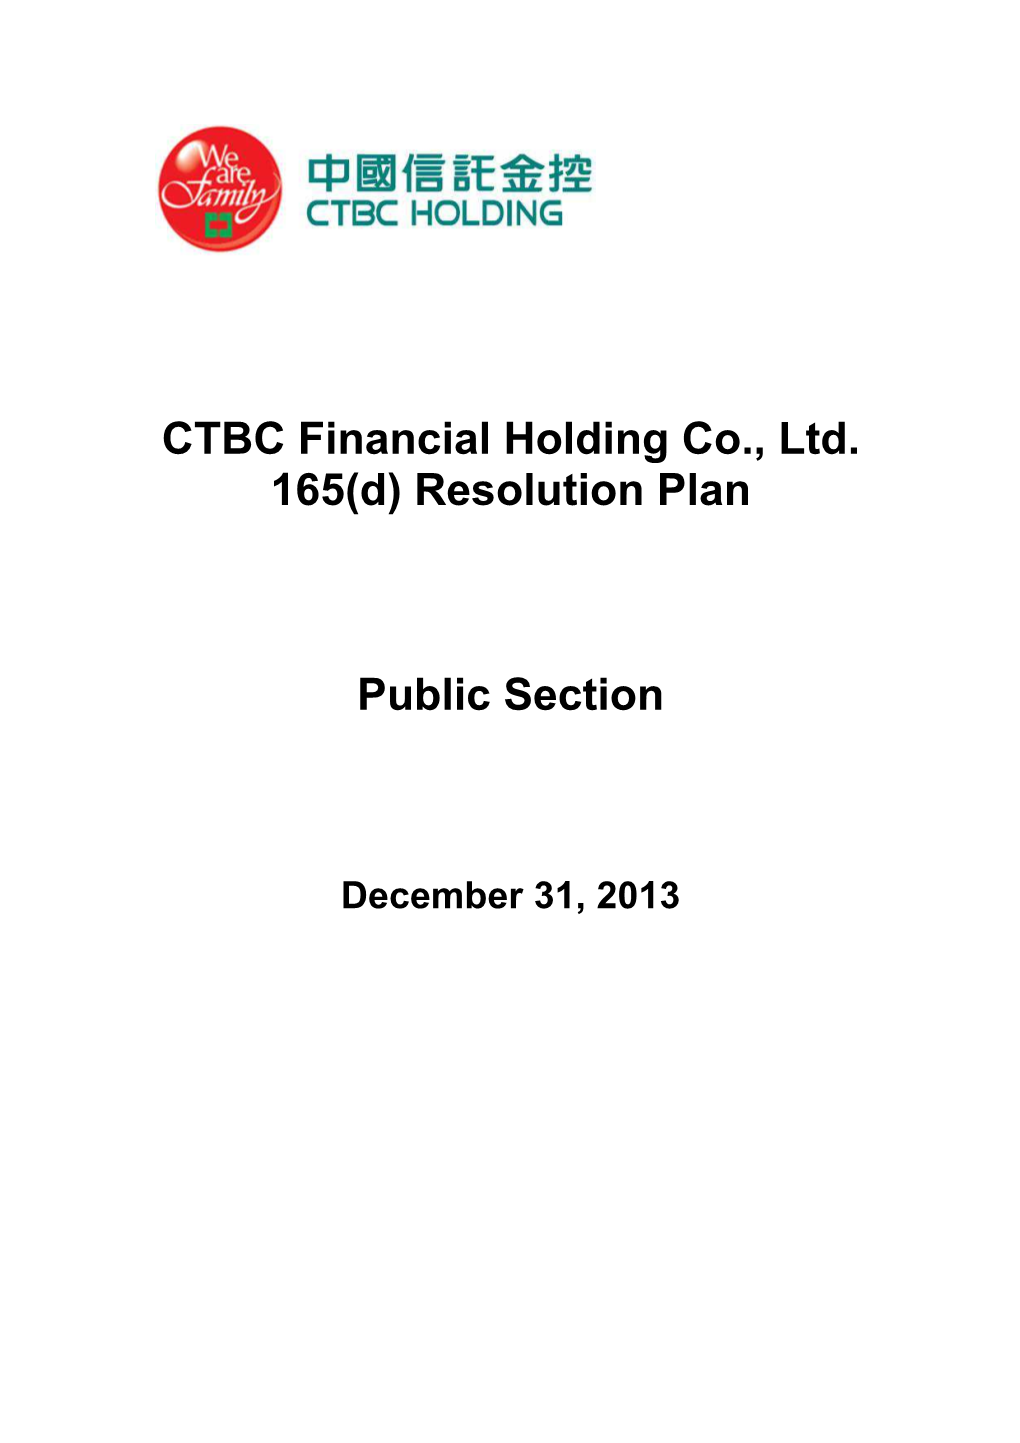 CTBC Holding Public Resolution Plan 2013